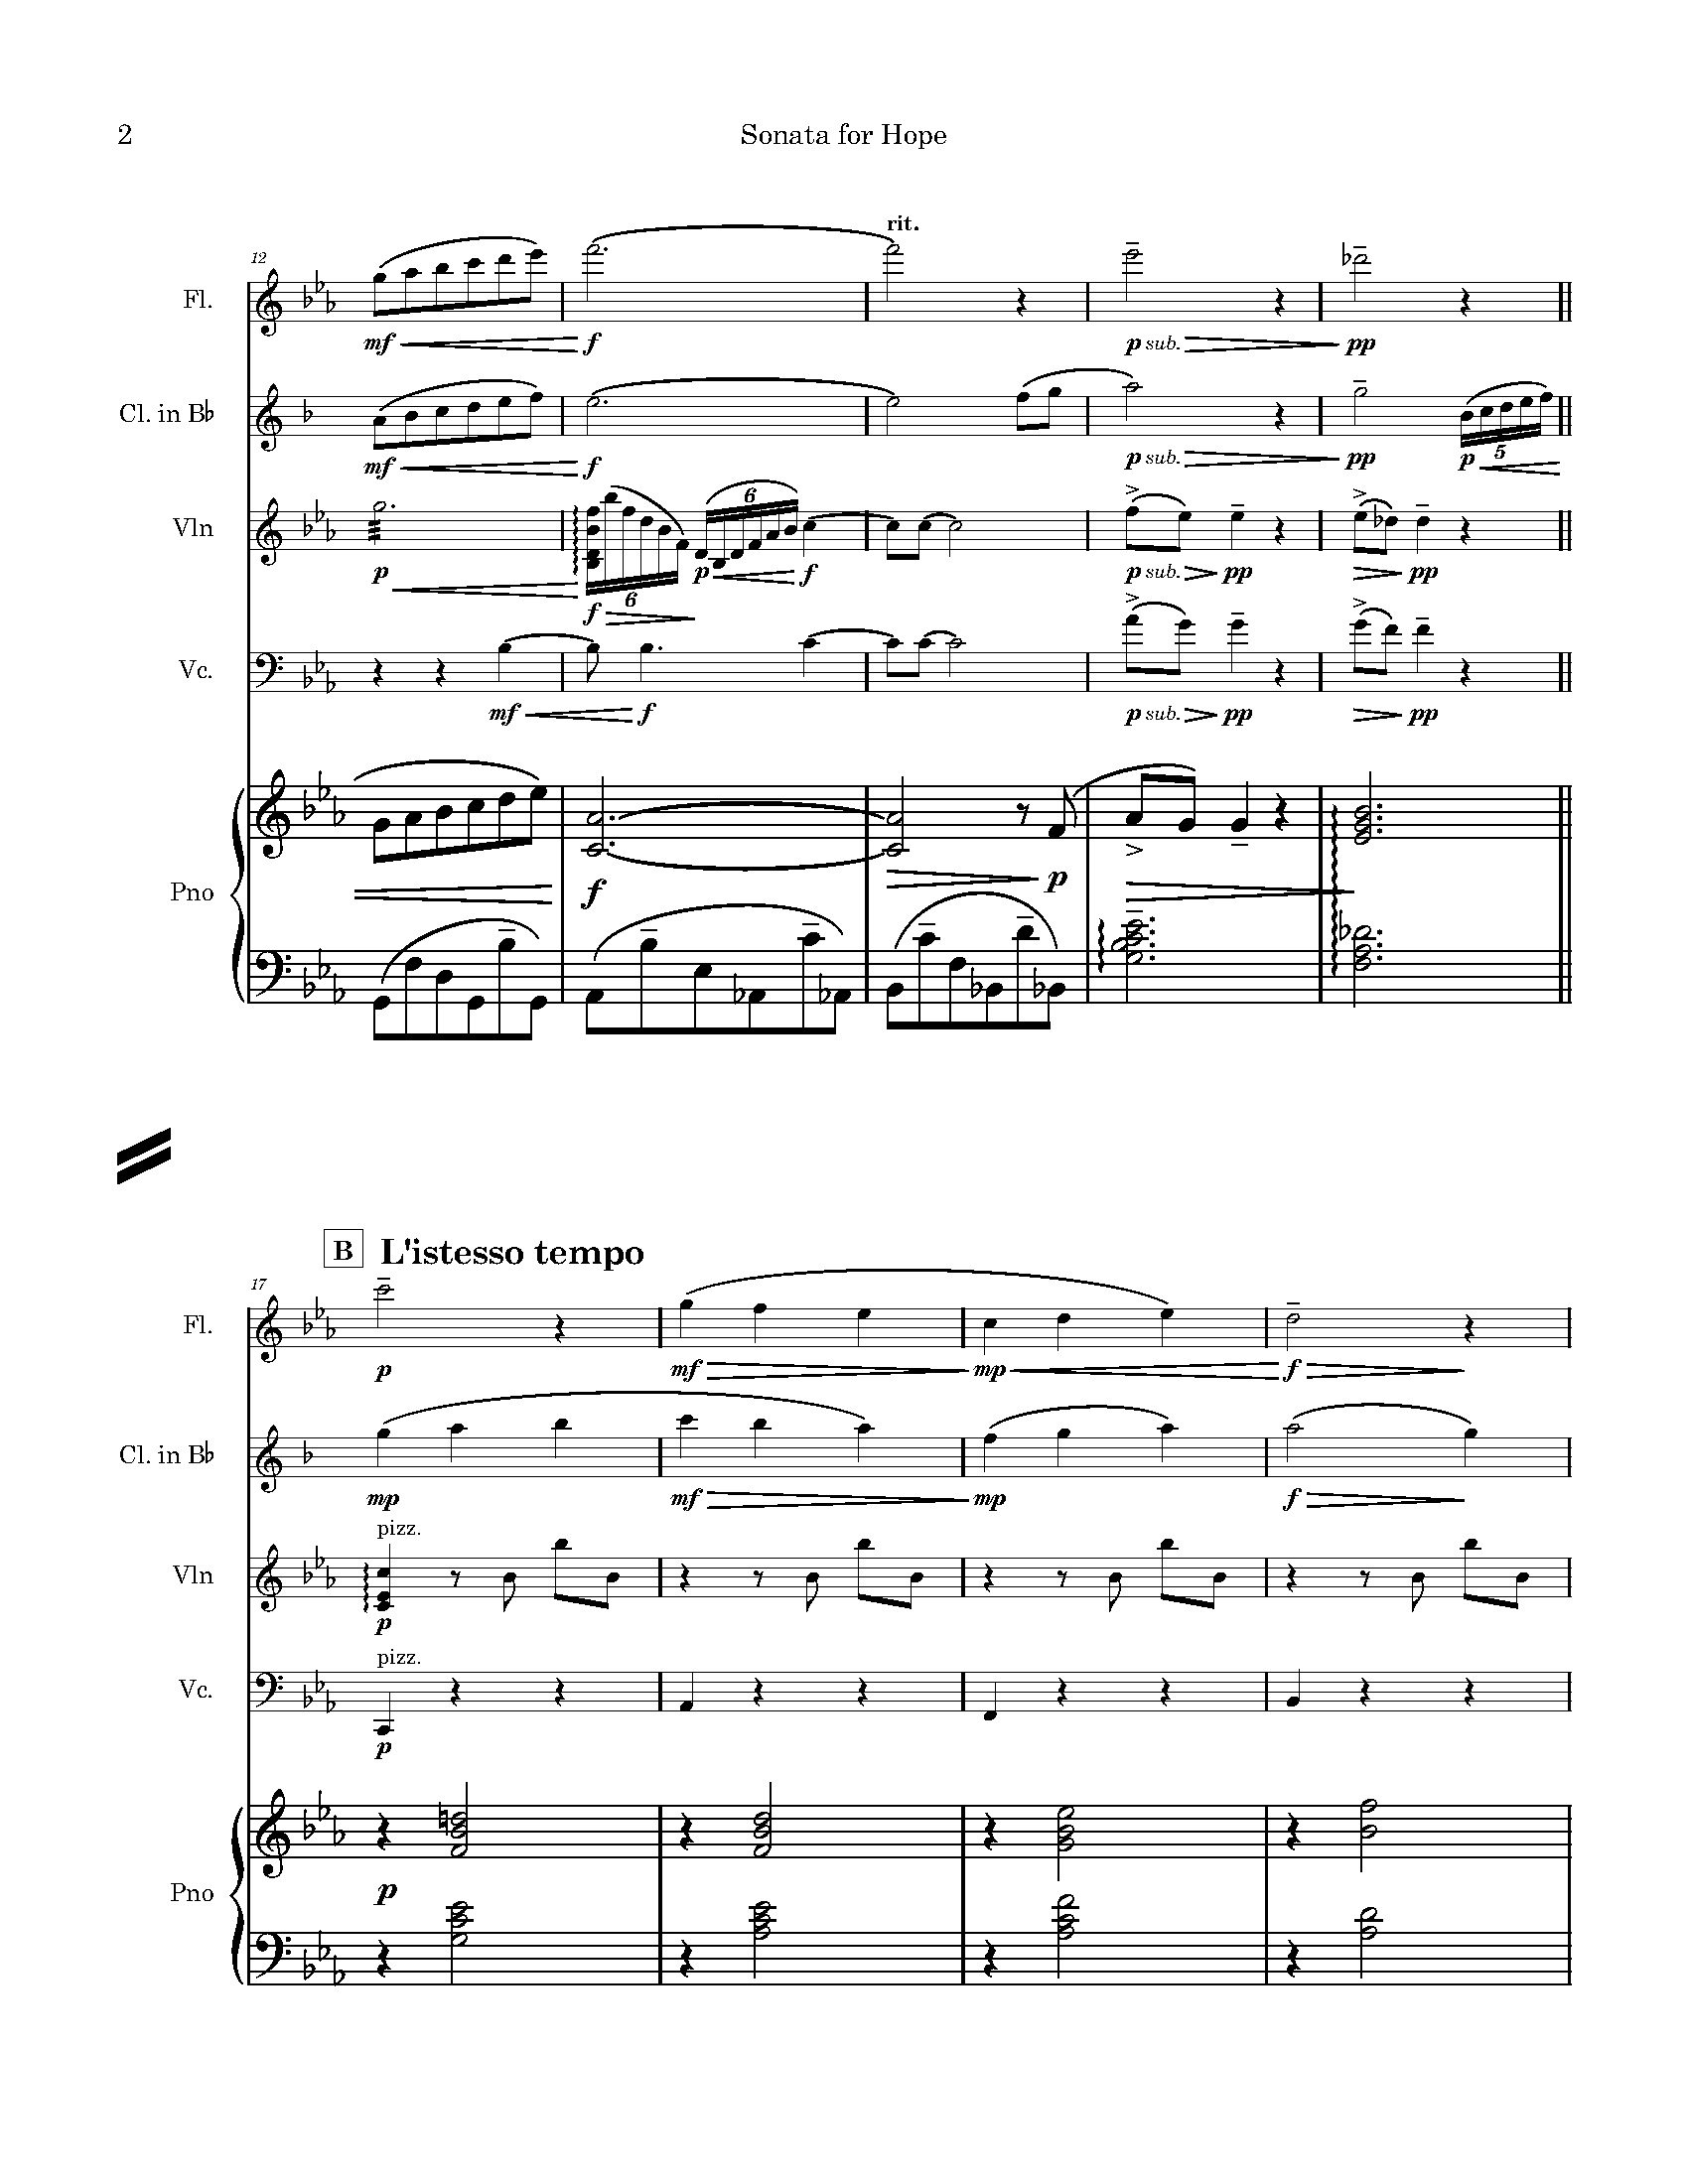 Sonata for Hope - Piano Score_Page_02.jpg